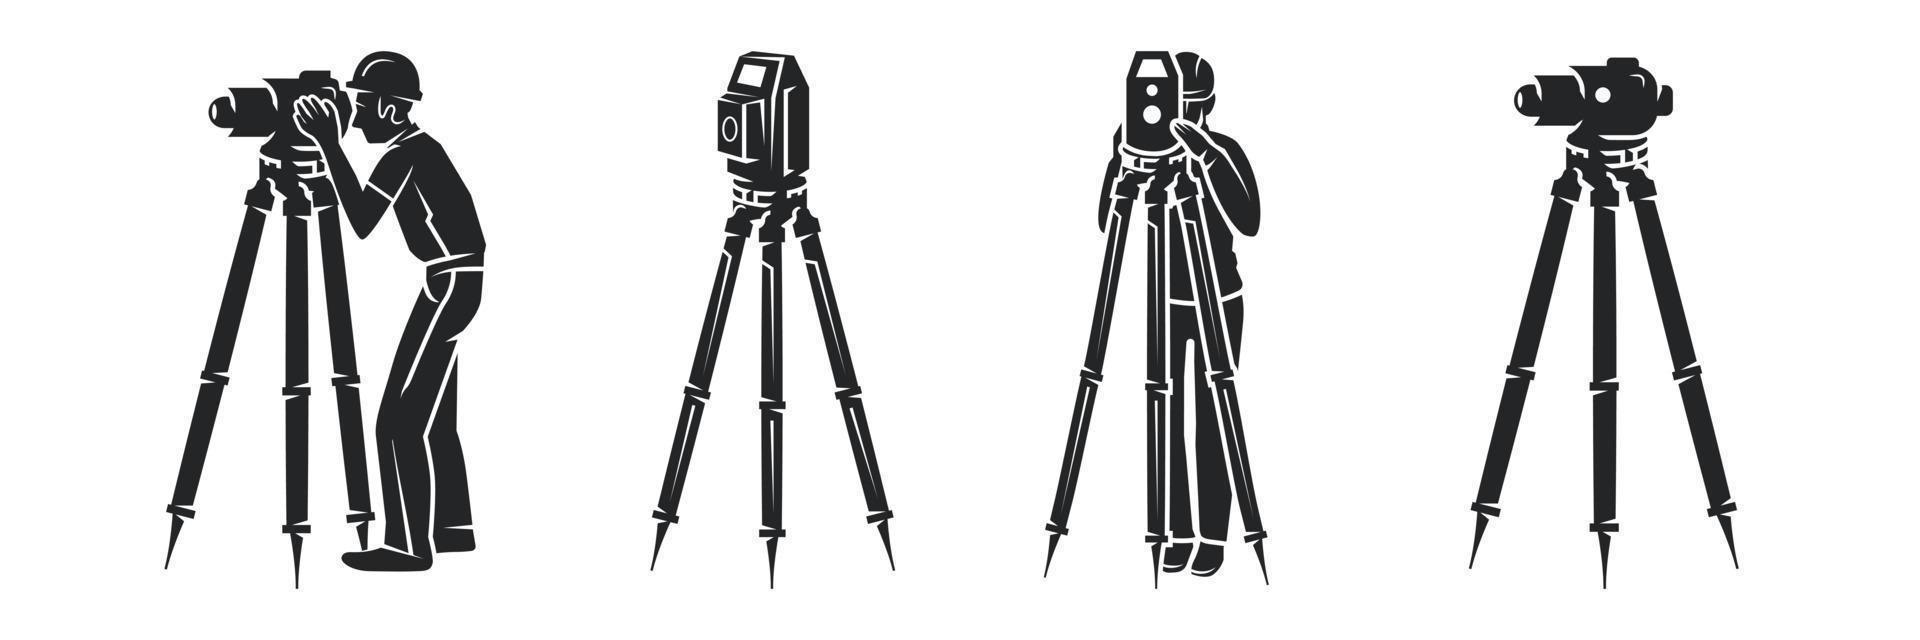 Surveyor icon set, simple style vector